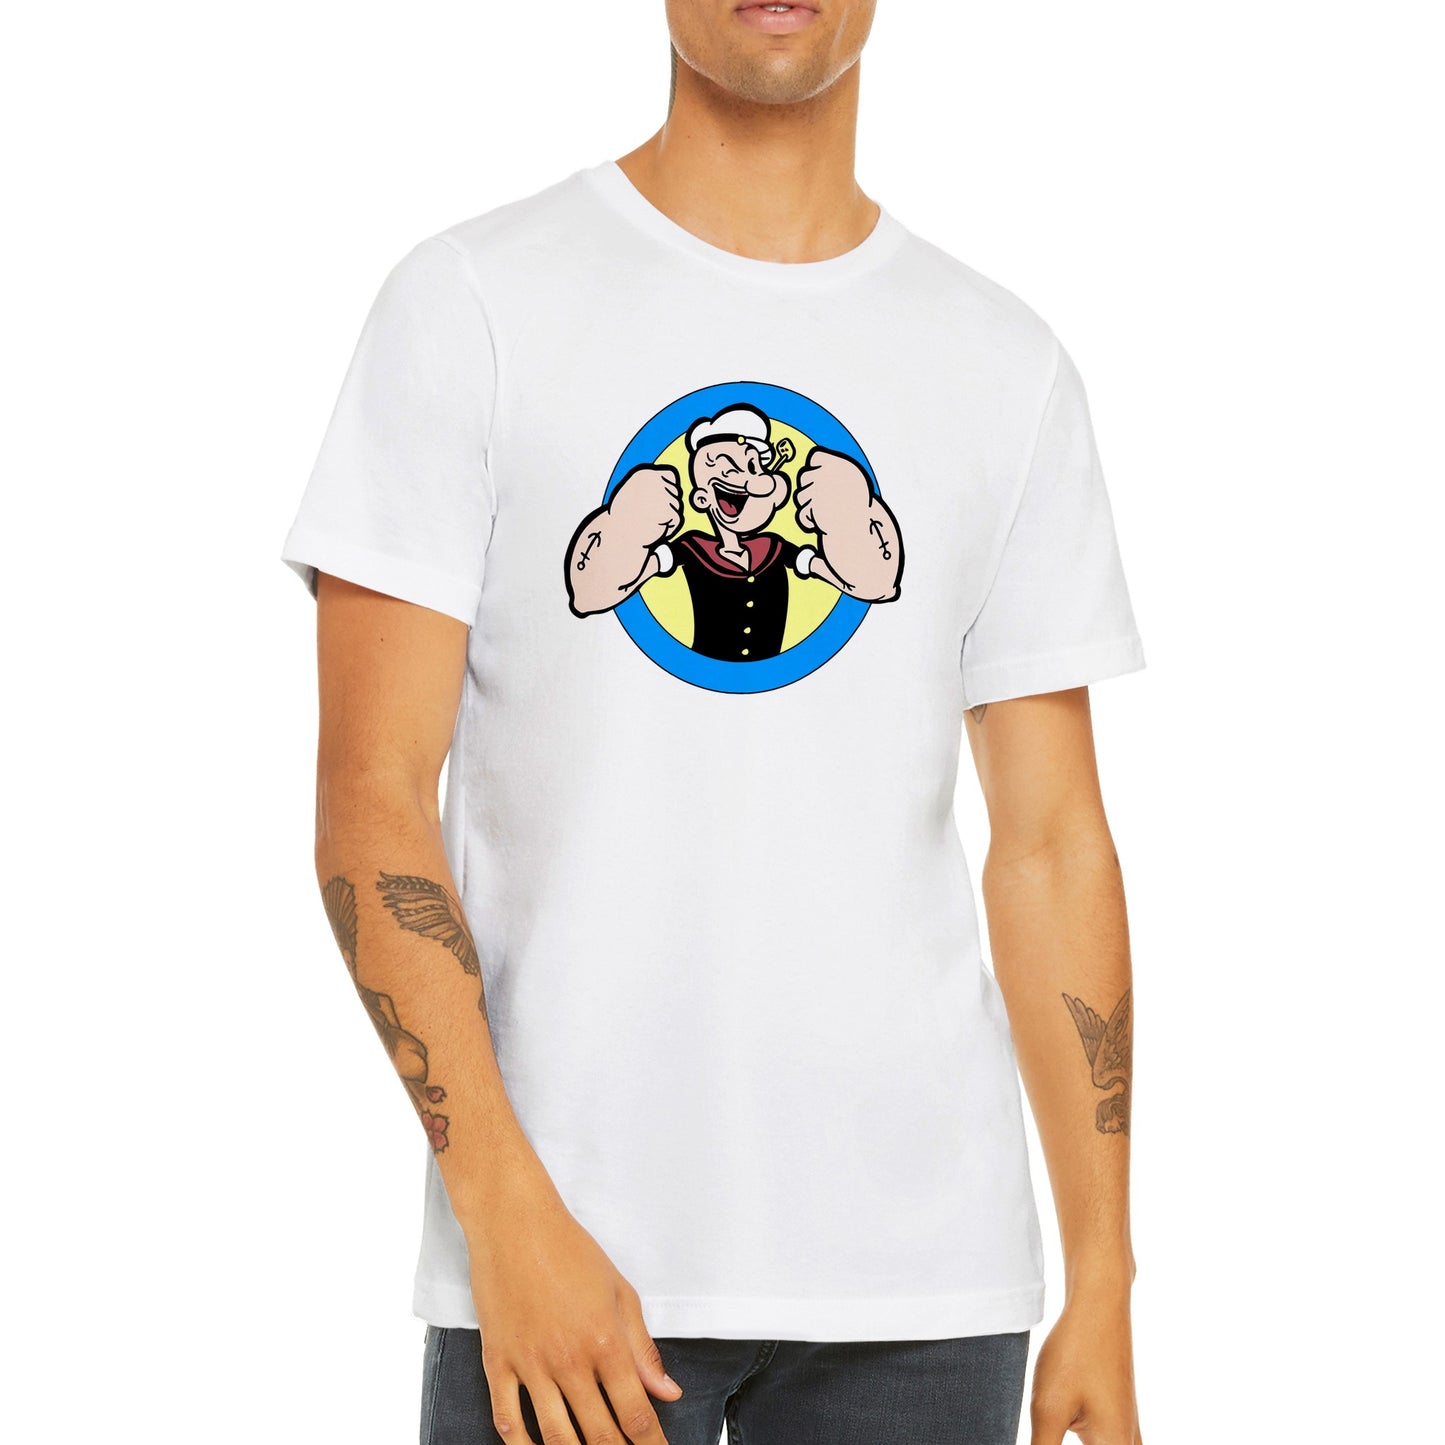 Popeye T-shirt - Popeye Strong Arms Artwork - Premium Unisex T-shirt